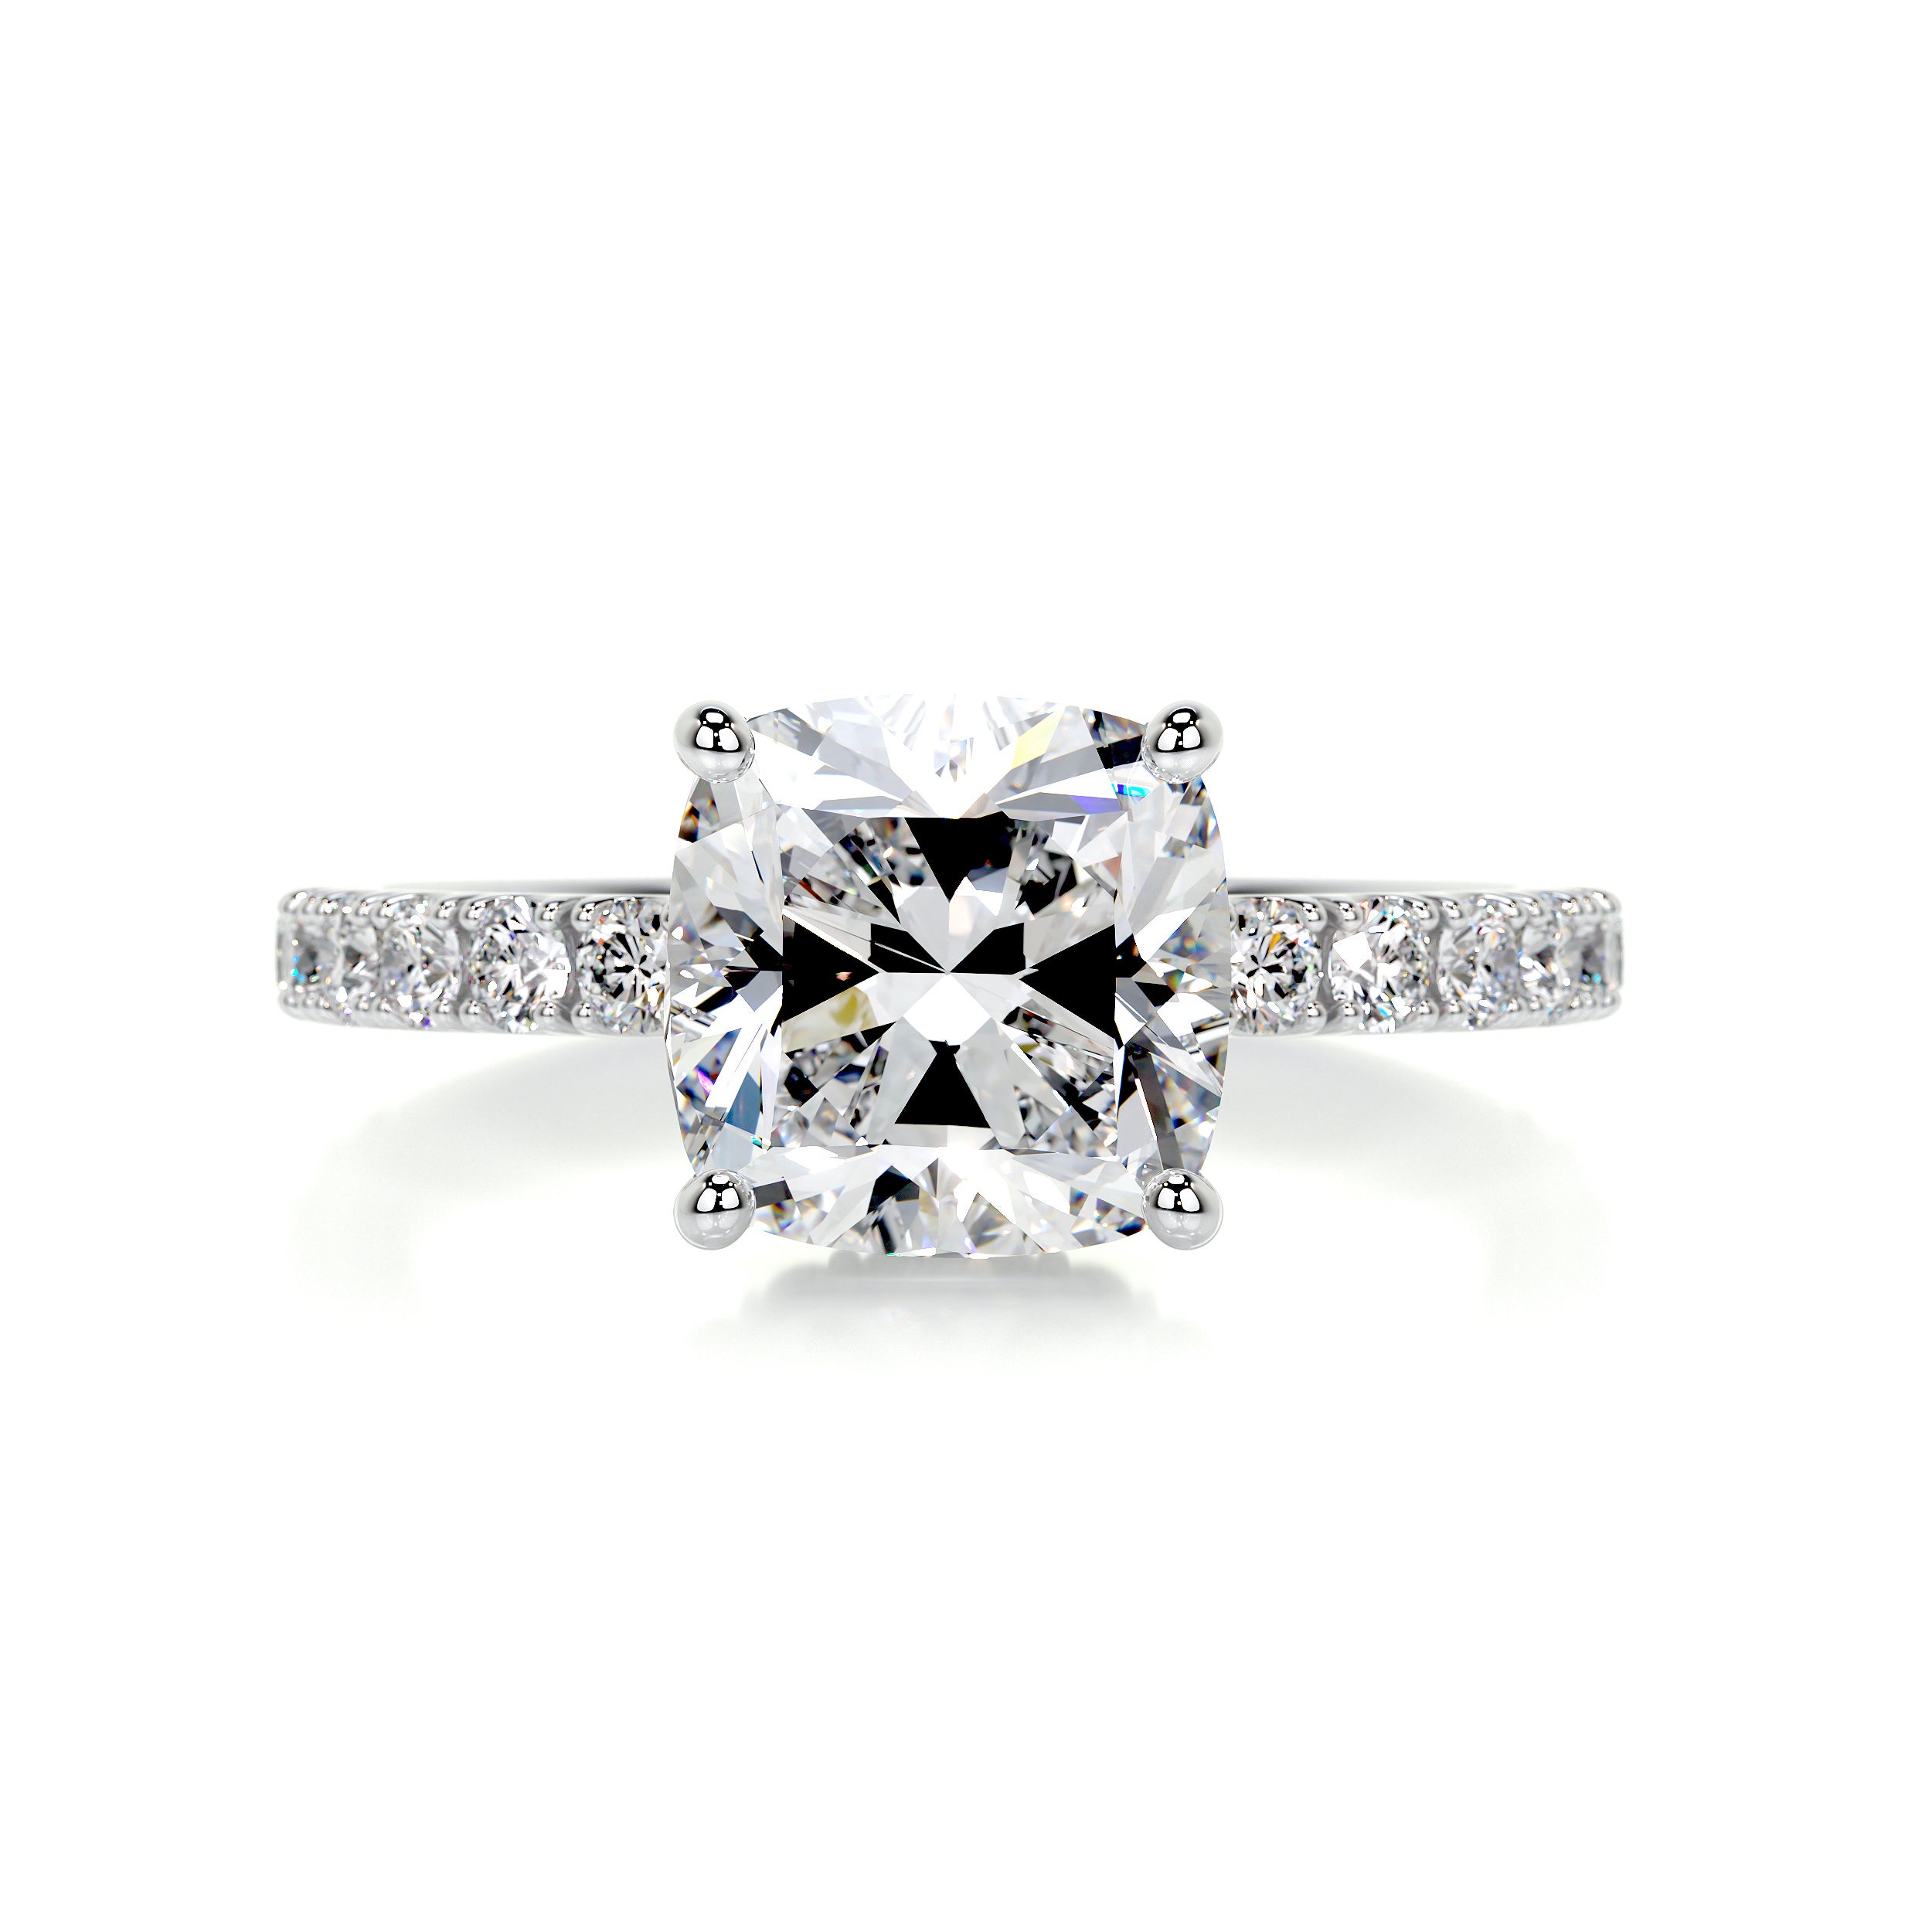 Cushion Cut Diamond Engagement Ring with Halo | Birks